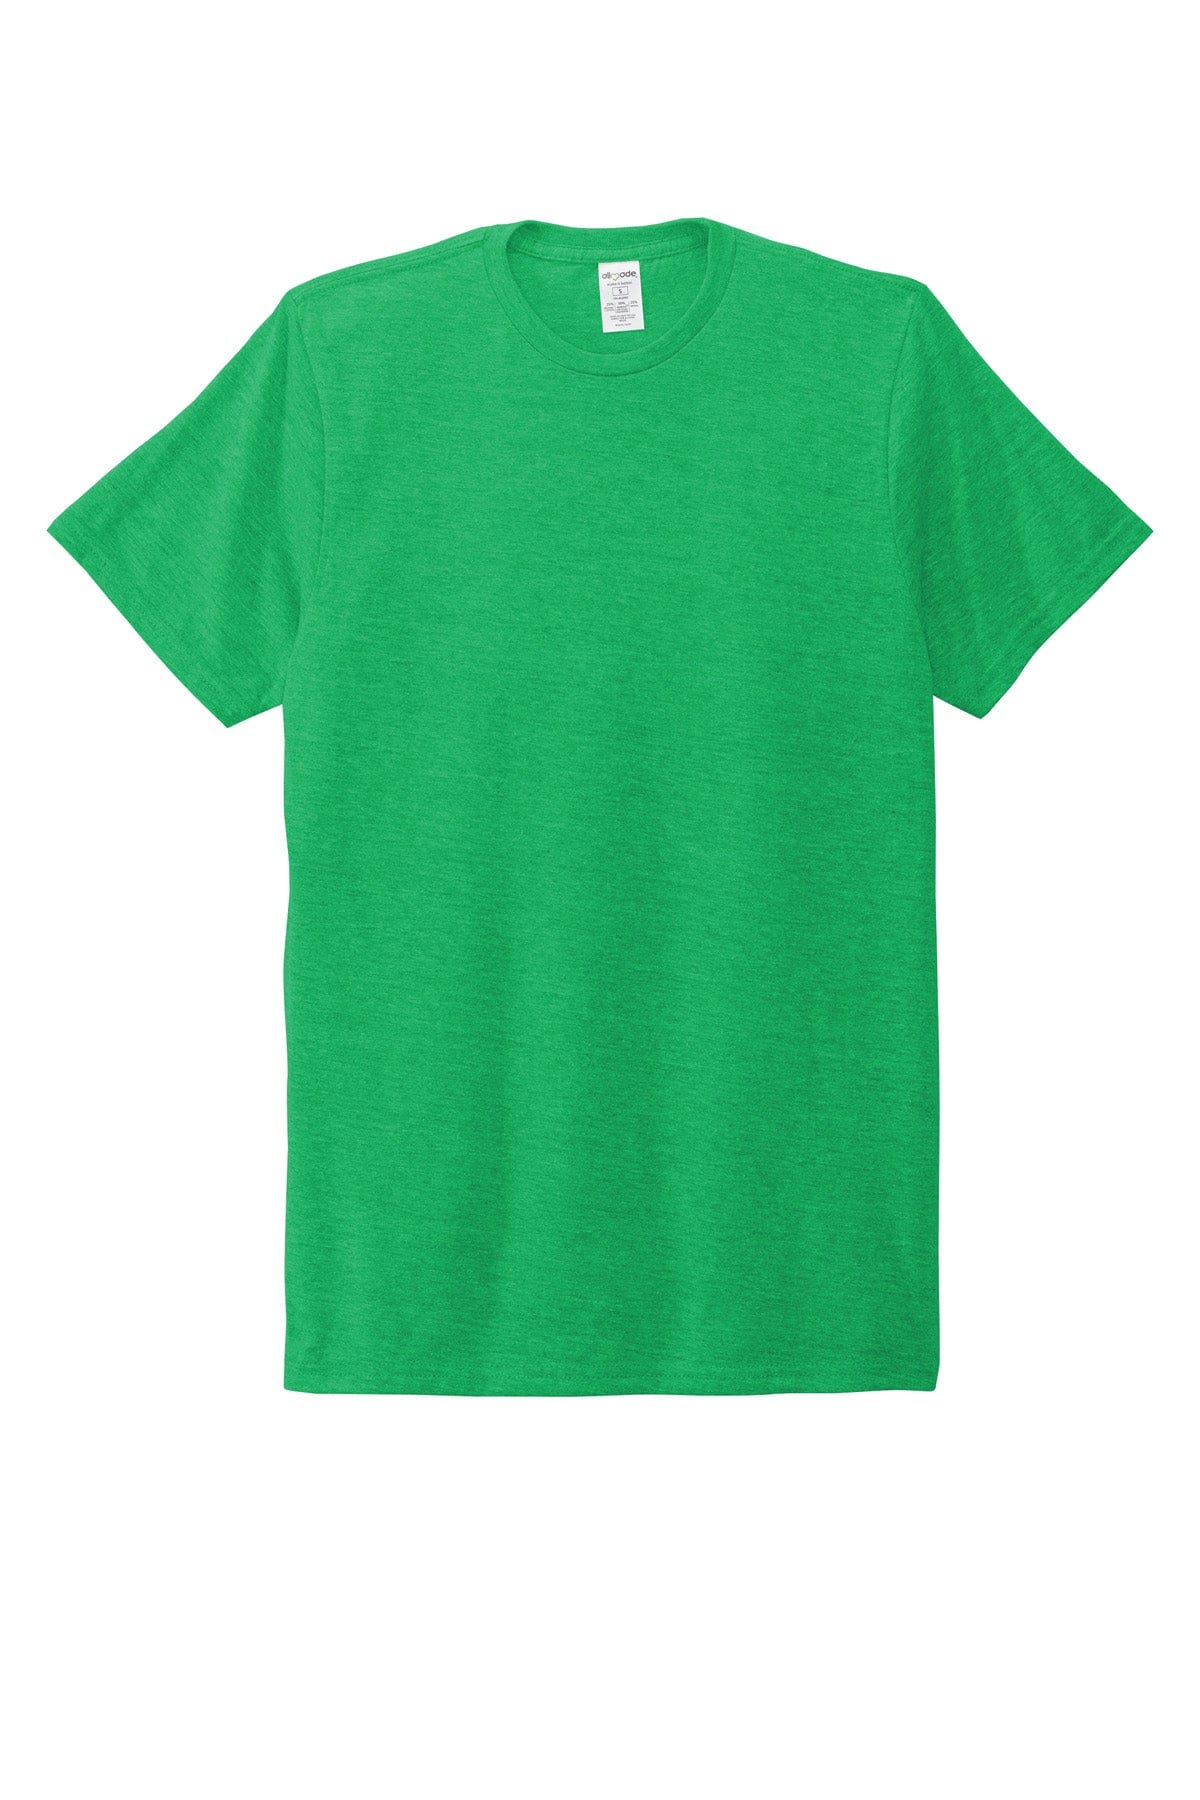 XS / Enviro Green Custom Allmade Unisex Tri-Blend T-Shirt